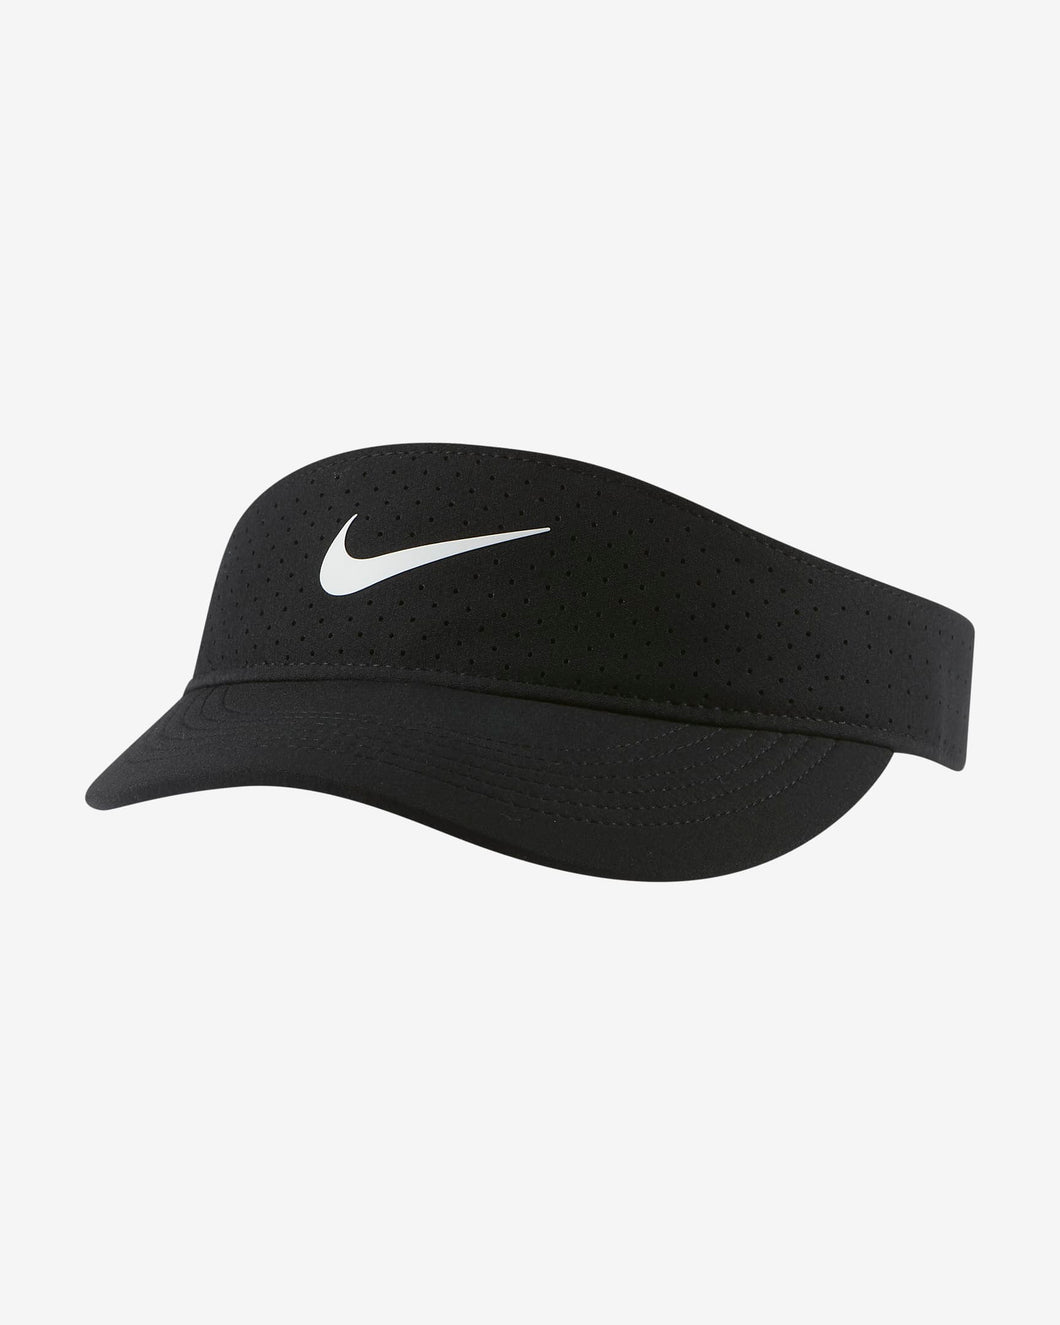 Nike Advantage Tennis Visor Black